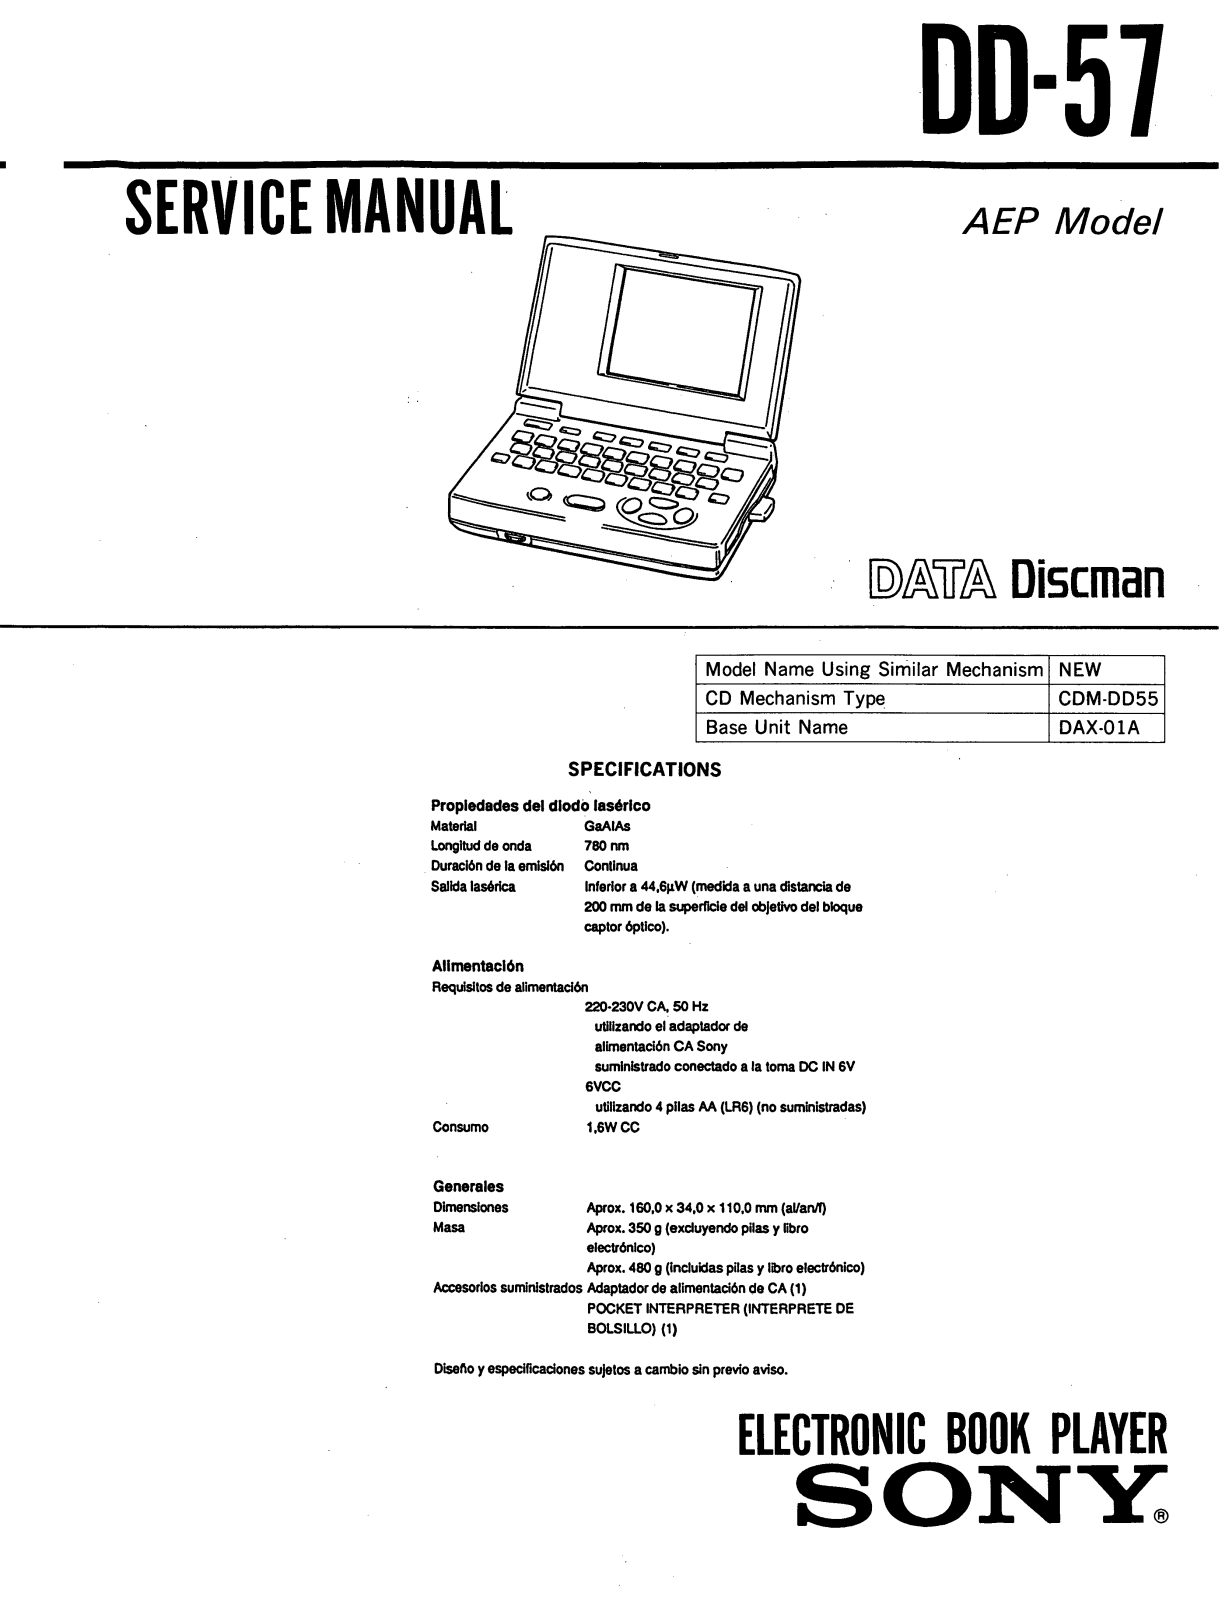 Sony DD-57 Service manual